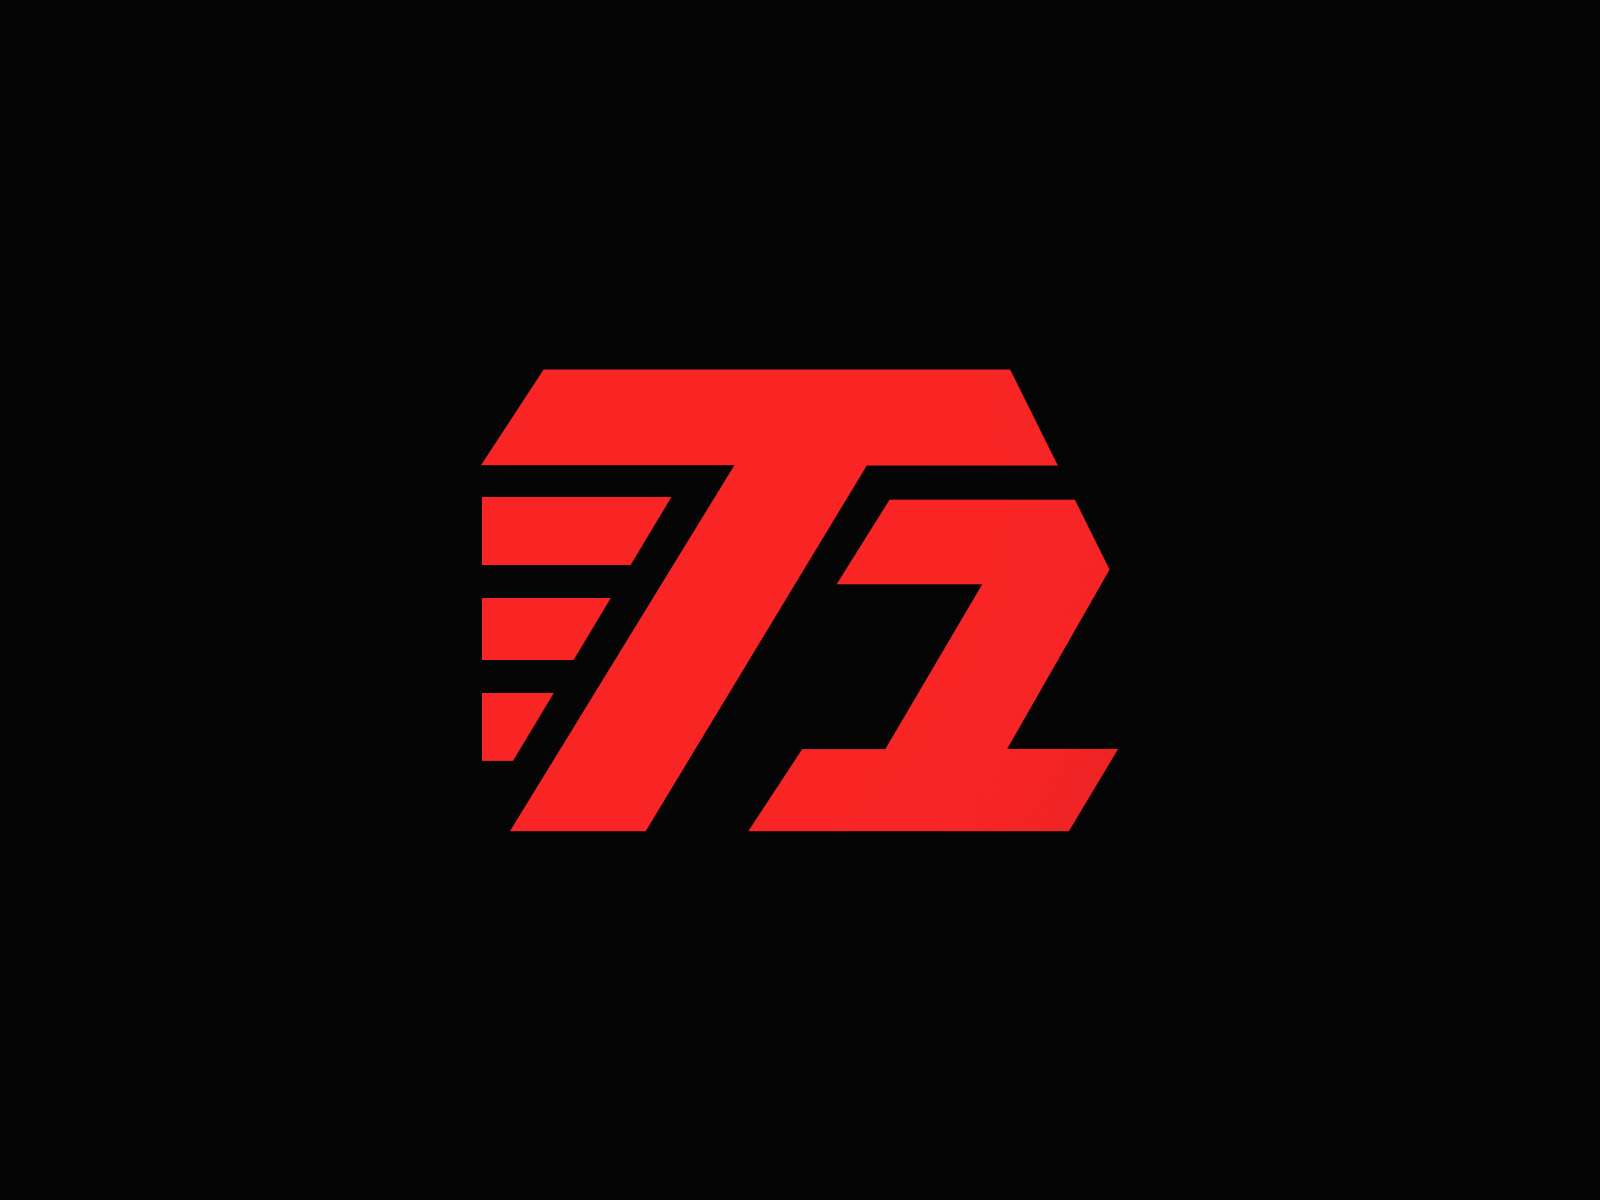 Logo redesign - T1 Esports team by Mansu on Dribbble